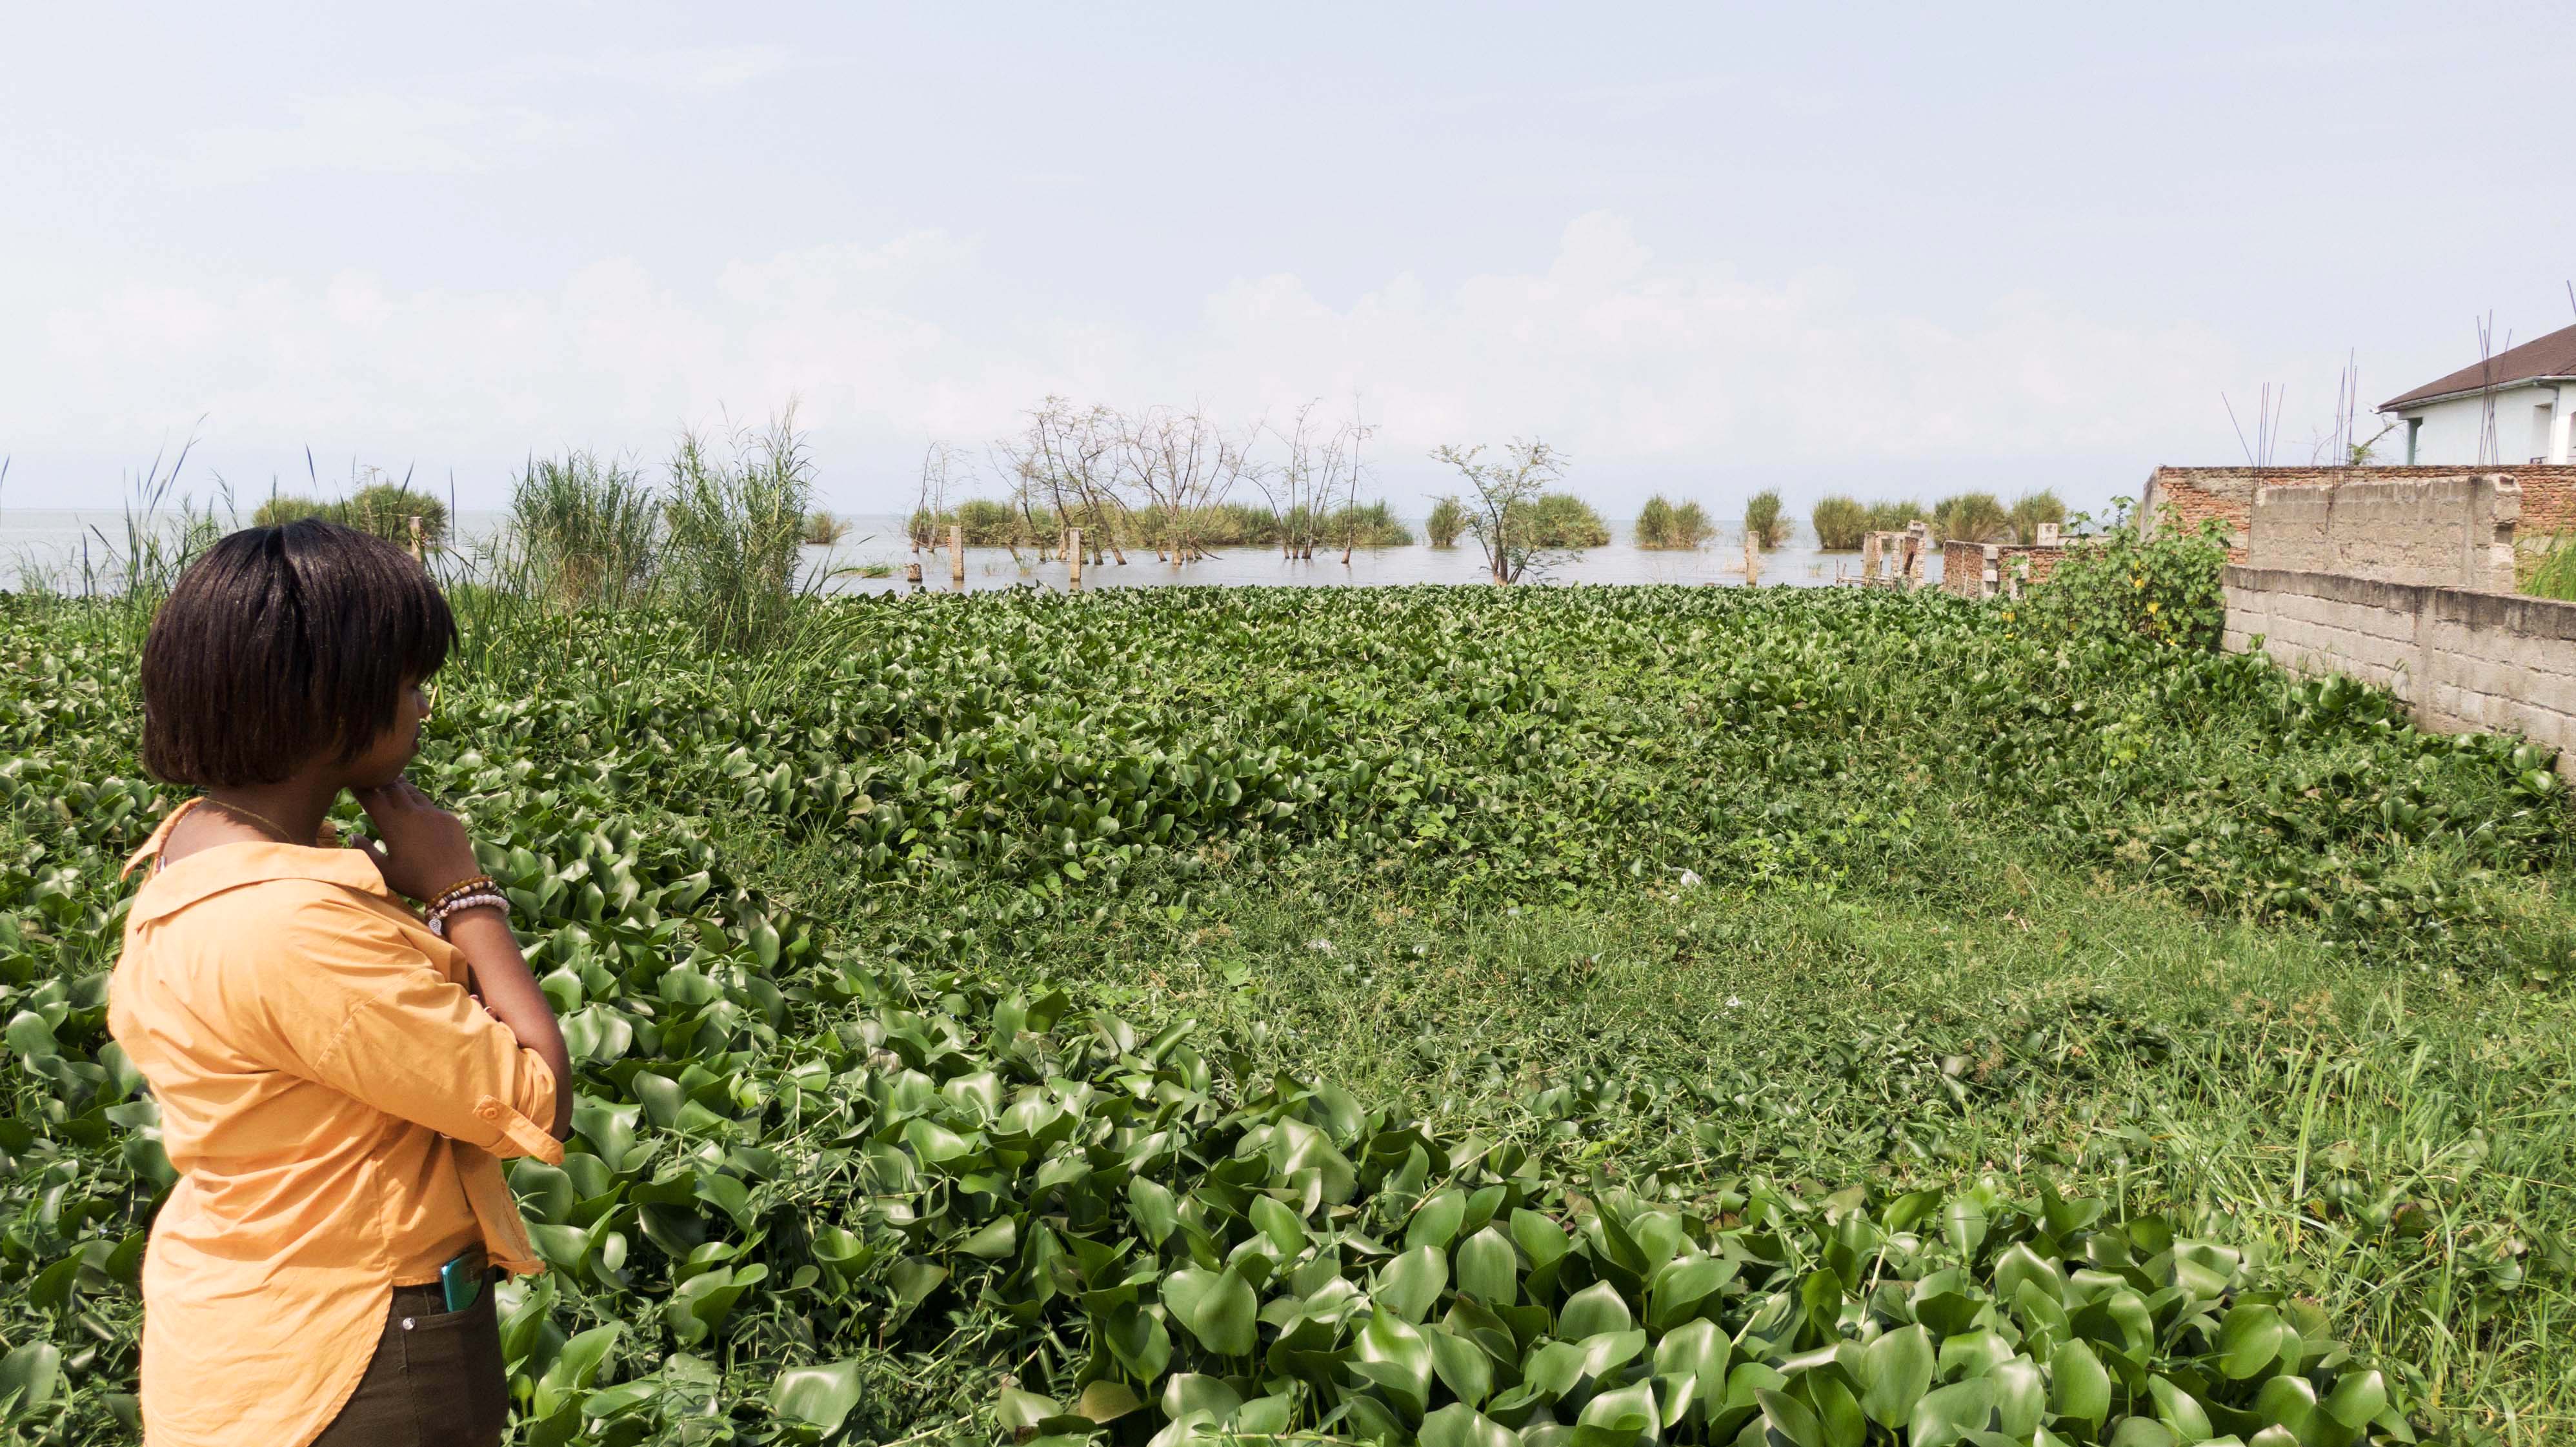 Kathia Gretta Iradukunda, winner of the Awa Prize 2022, observes a field of water hyacinths on the shores of Lake Tanganyika.